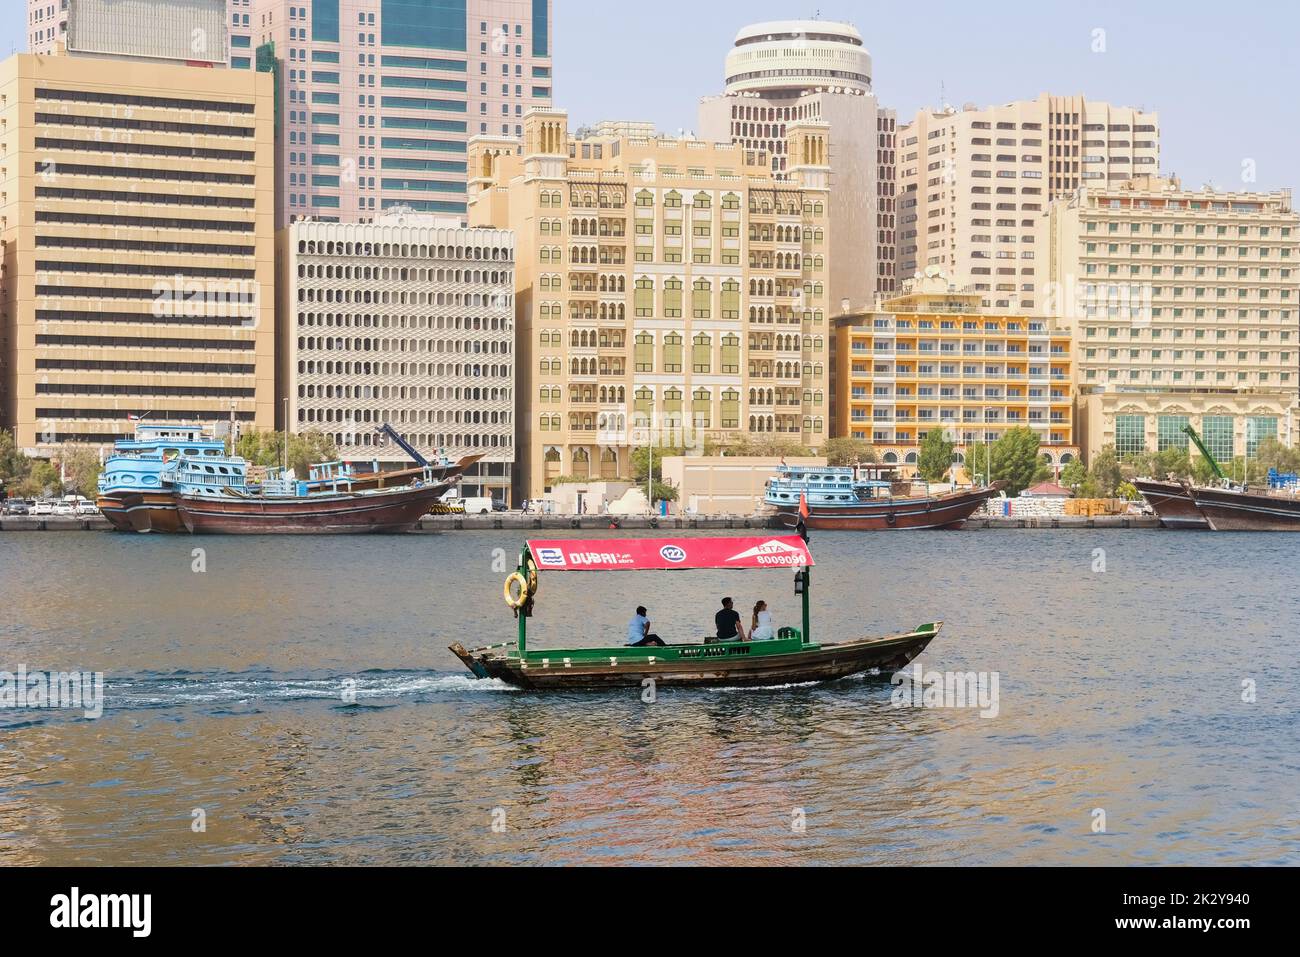 Water tourist ride on wooden Arabic boat Abra, water taxi RTA, popular mode of urban transport.Dubai, UAE. Stock Photo